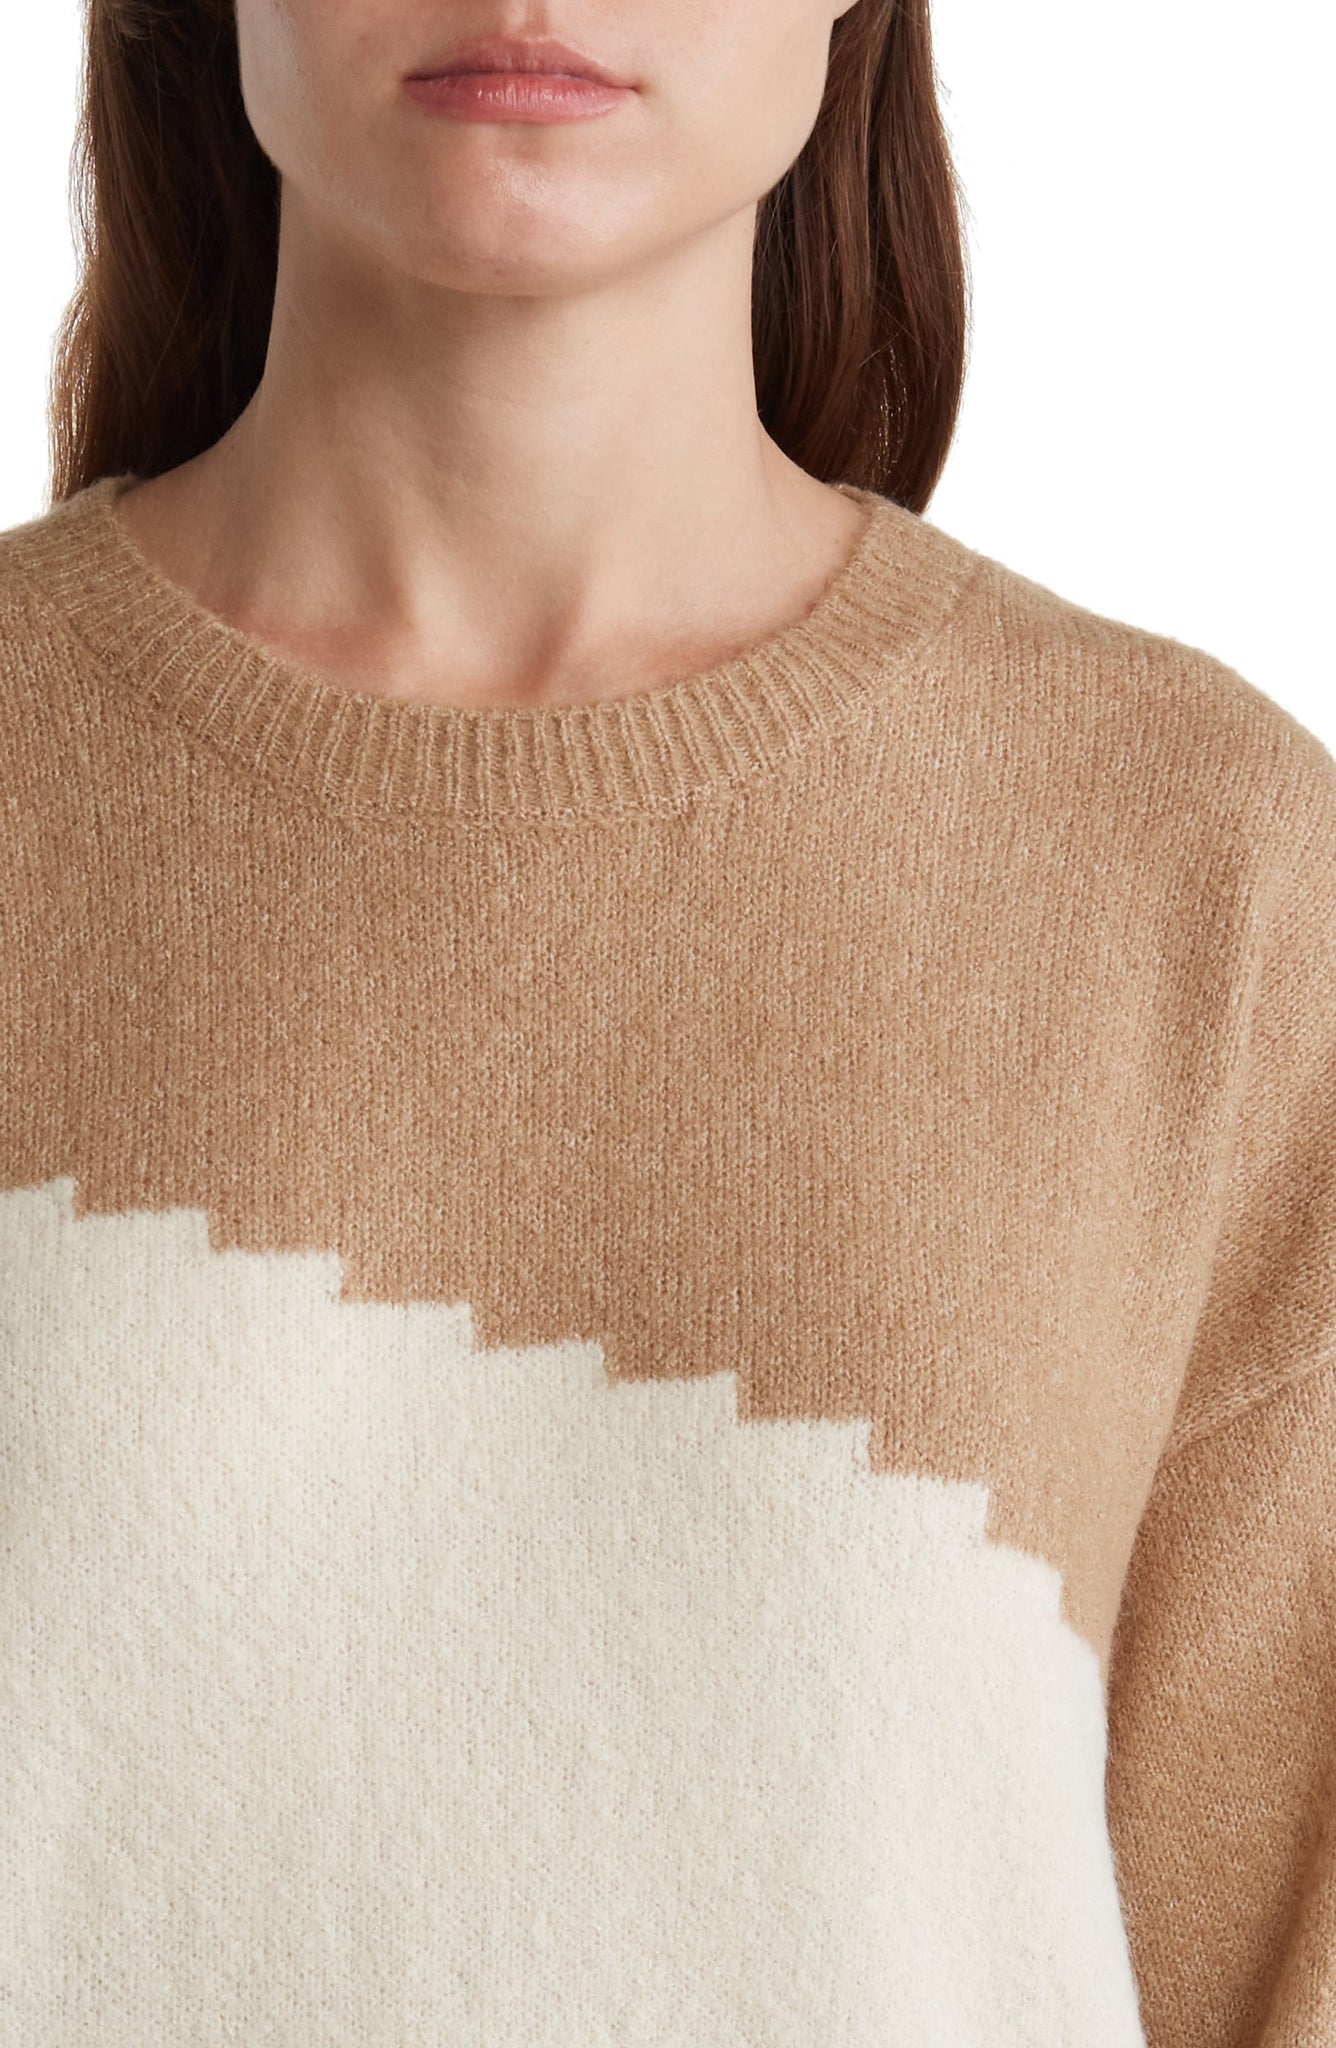 BLU PEPPER Etched Colorblock Sweater, Main, color, KHAKI MULTI